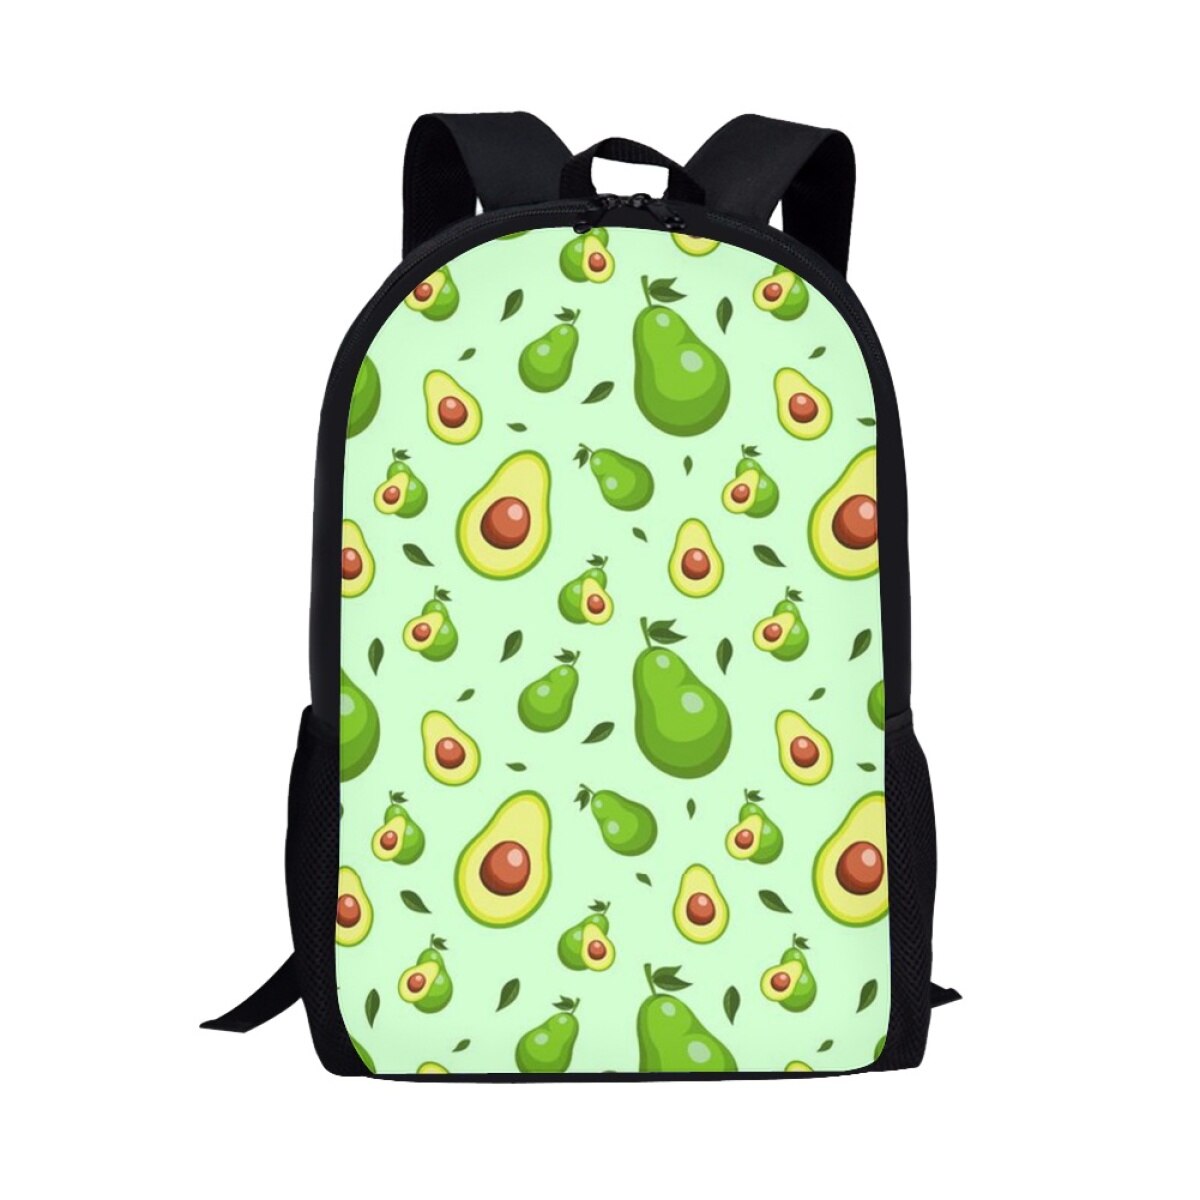 Rucksack mit Avocado-Muster